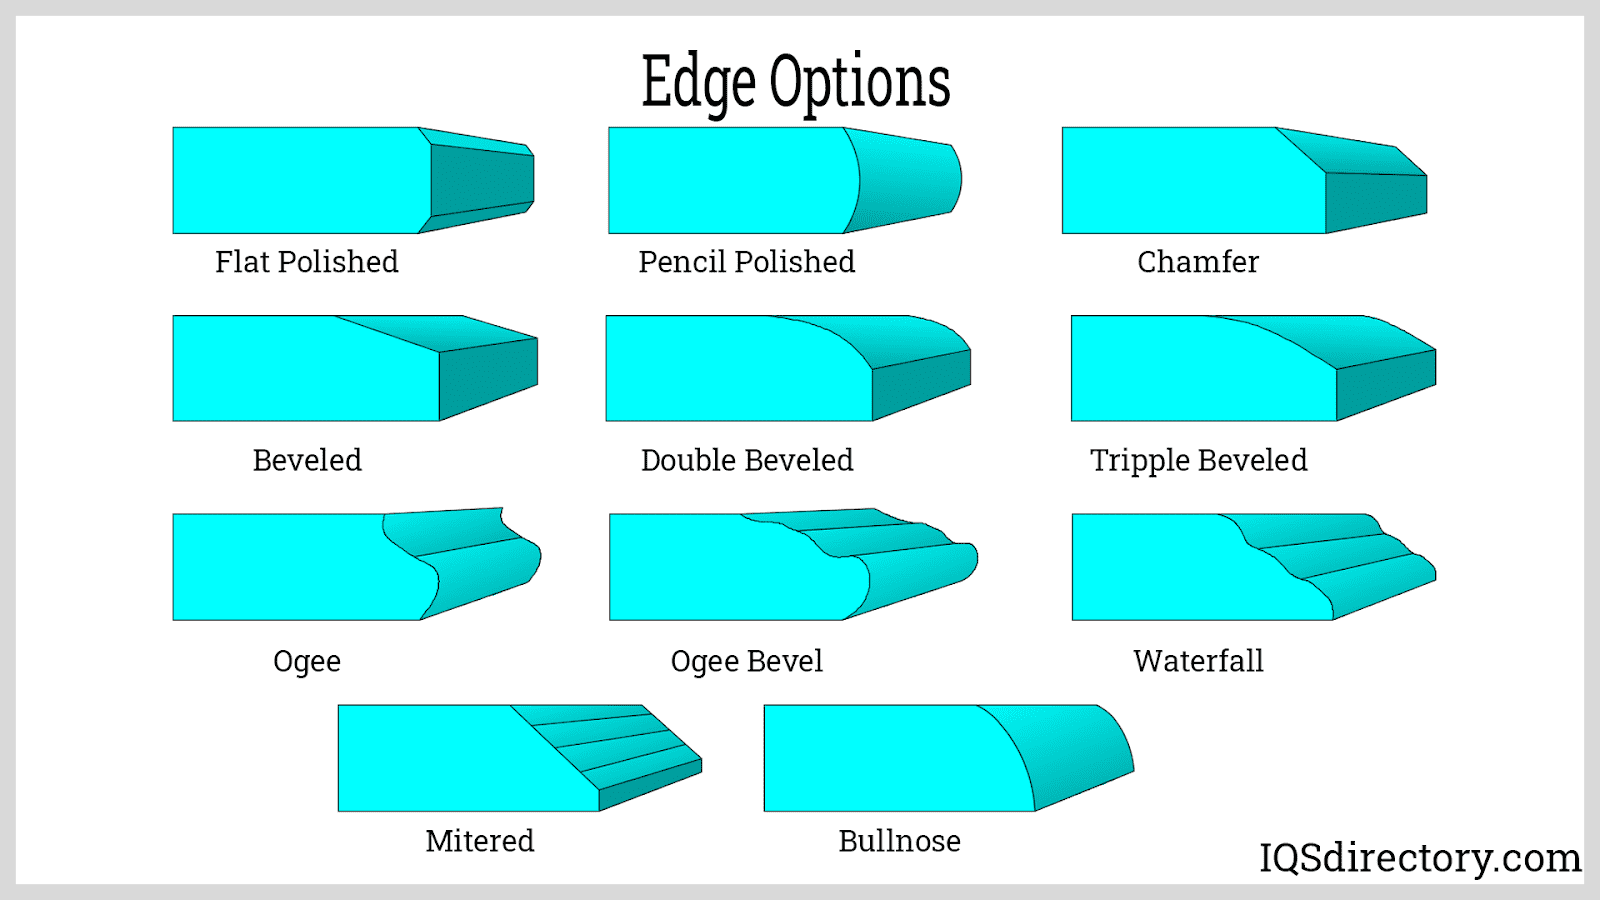 Edge Options